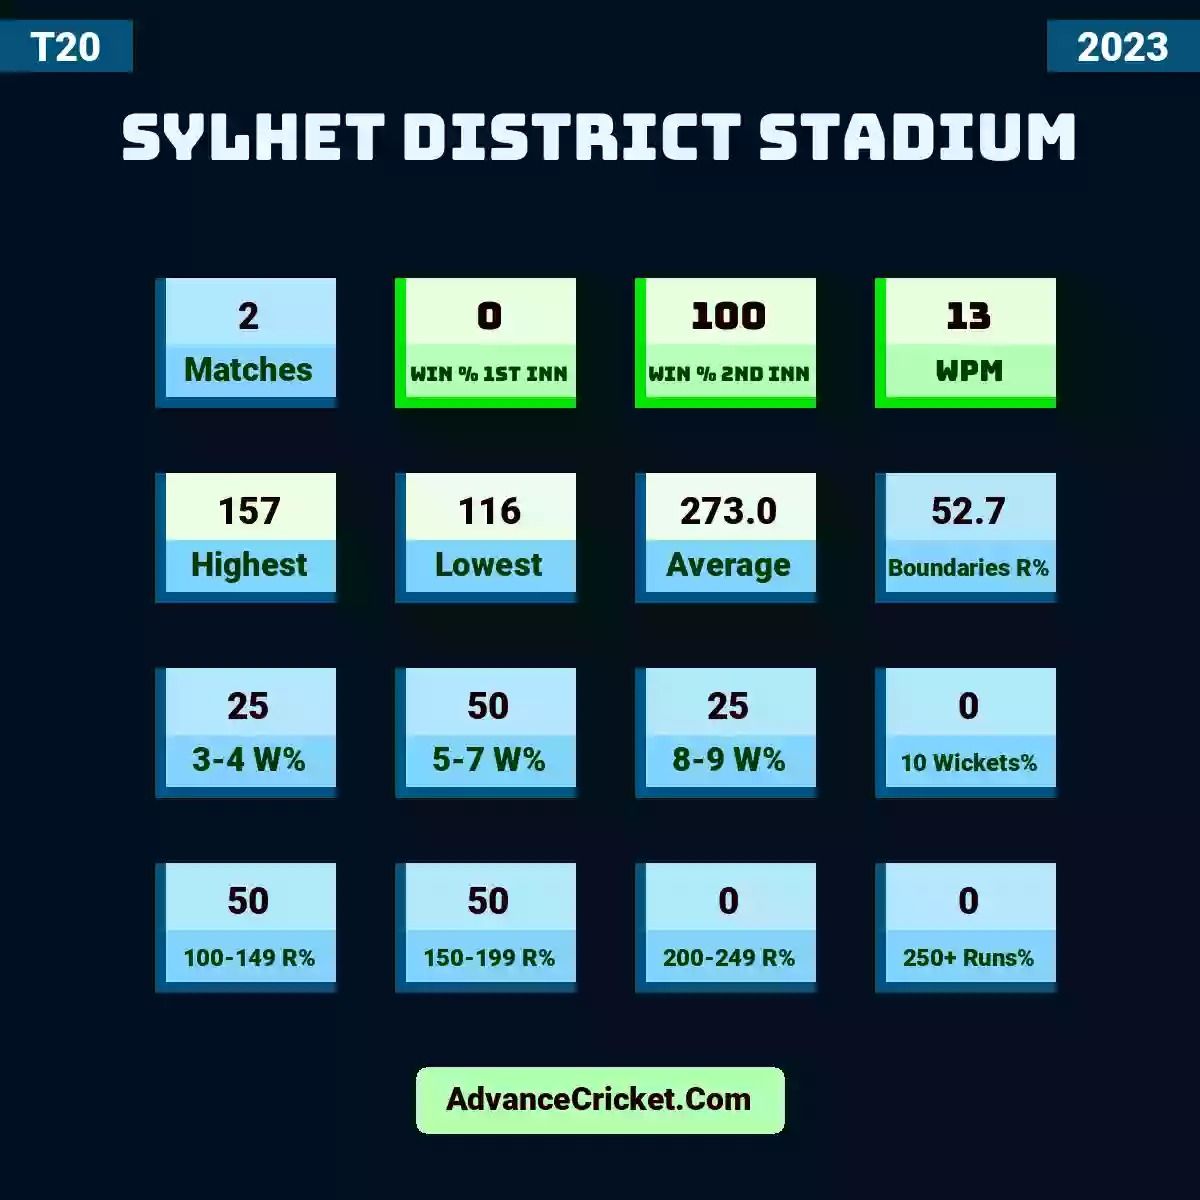 Image showing Sylhet District Stadium with Matches: 2, Win % 1st Inn: 0, Win % 2nd Inn: 100, WPM: 13, Highest: 157, Lowest: 116, Average: 273.0, Boundaries R%: 52.7, 3-4 W%: 25, 5-7 W%: 50, 8-9 W%: 25, 10 Wickets%: 0, 100-149 R%: 50, 150-199 R%: 50, 200-249 R%: 0, 250+ Runs%: 0.